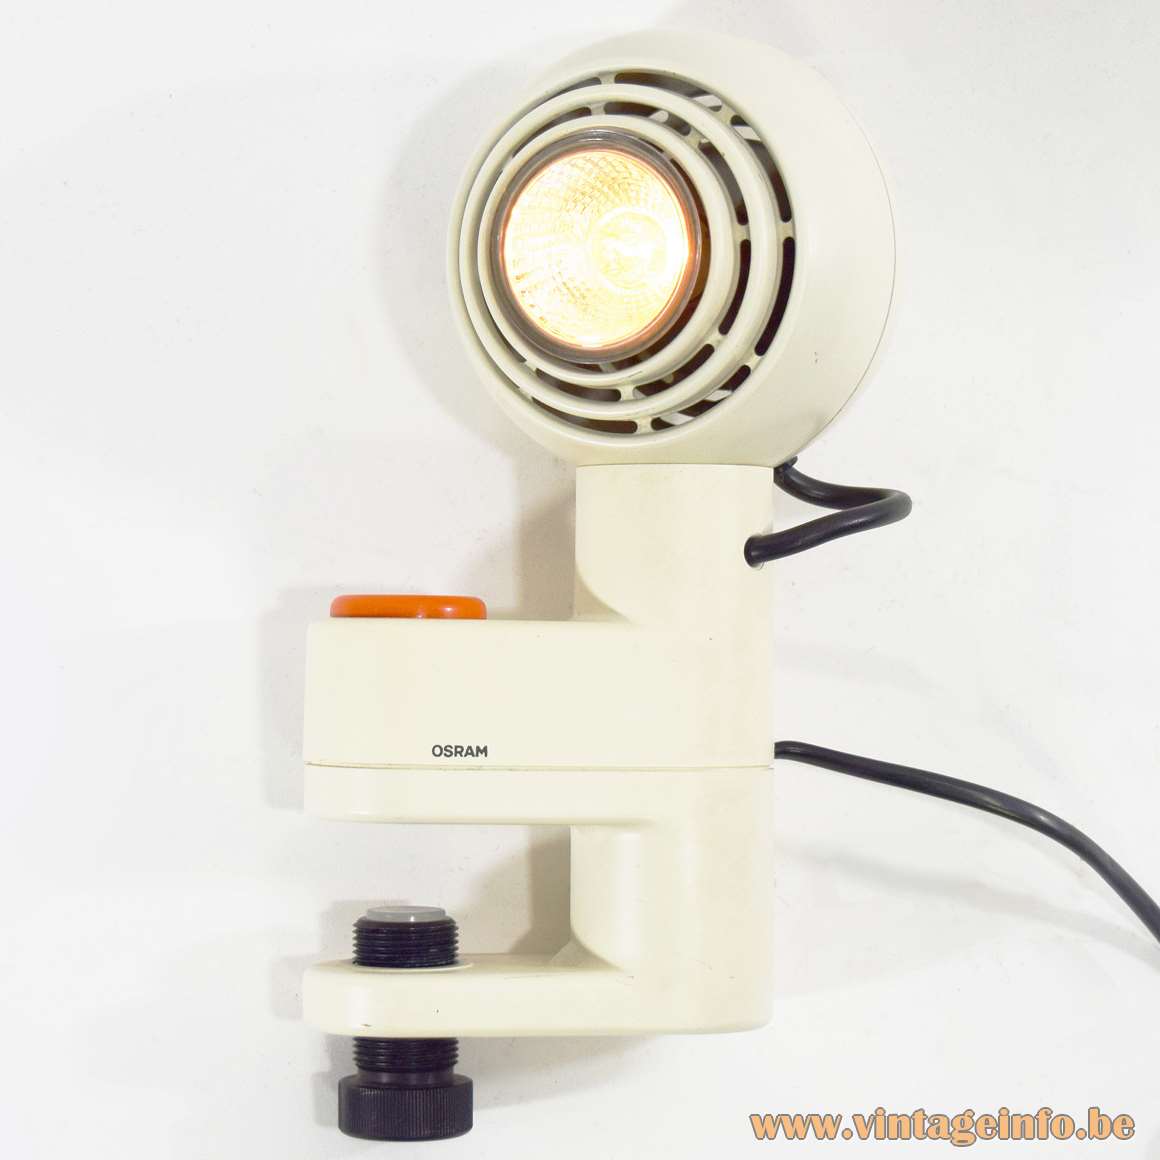 Osram Concentra Agilo Clamp Lamp white plastic magnetic globe orange round switch Schlagheck Schultes Design 1977